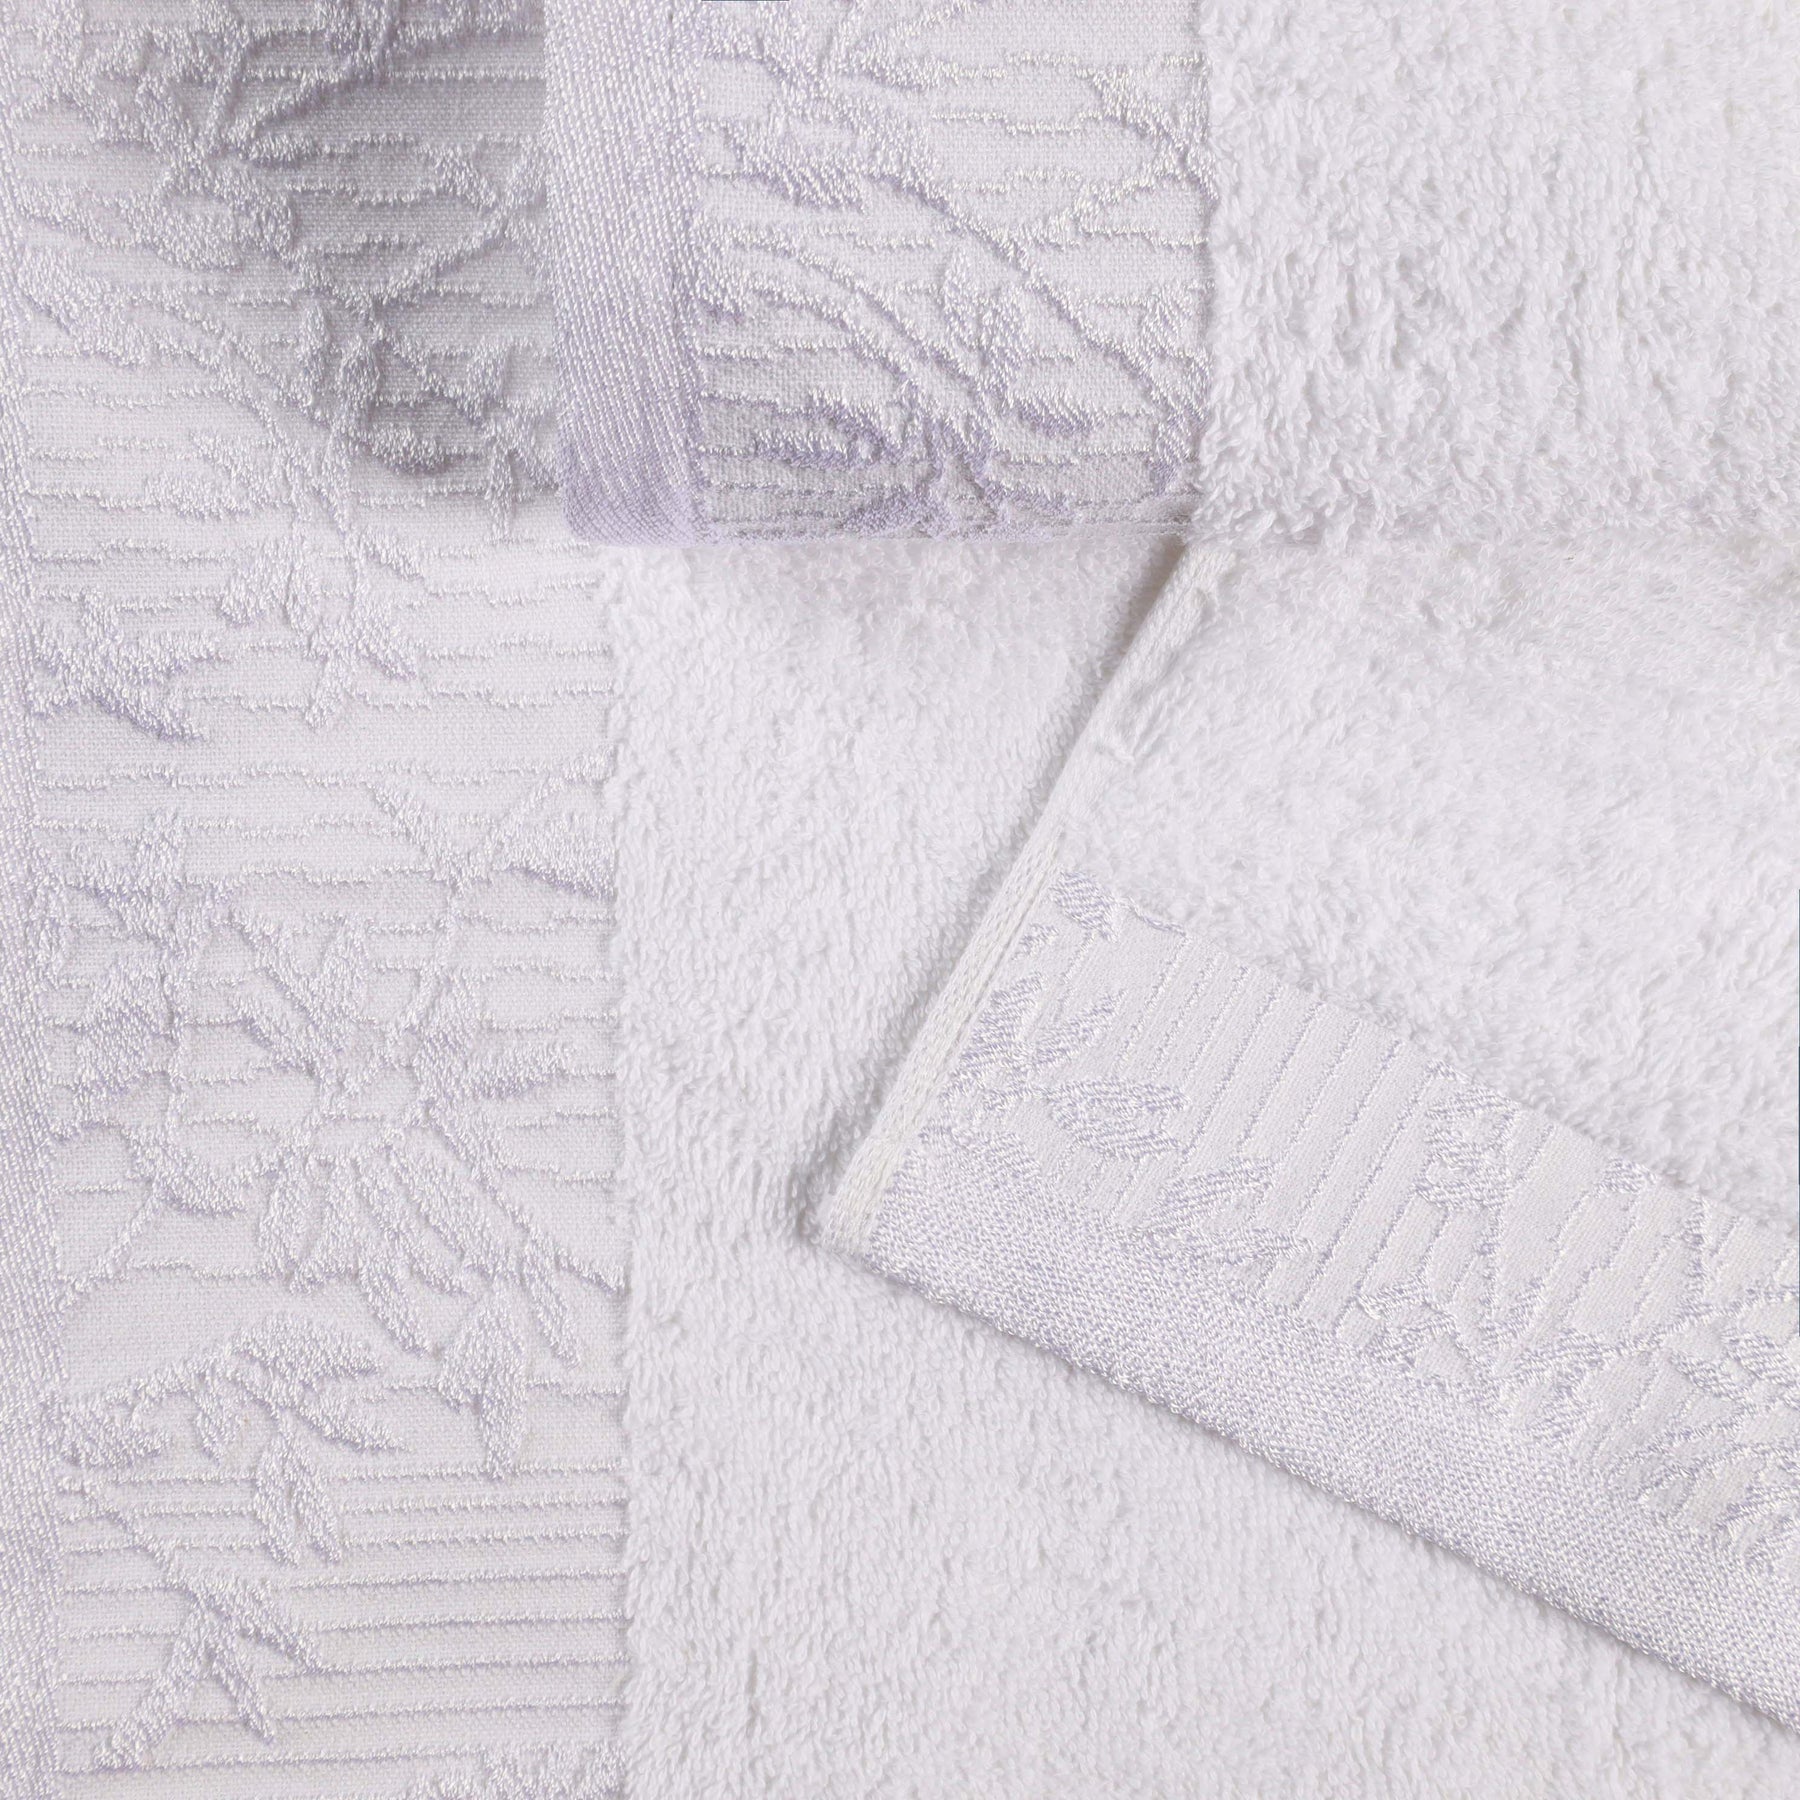 Superior Wisteria Cotton Floral Jacquard 6 Piece Towel Set